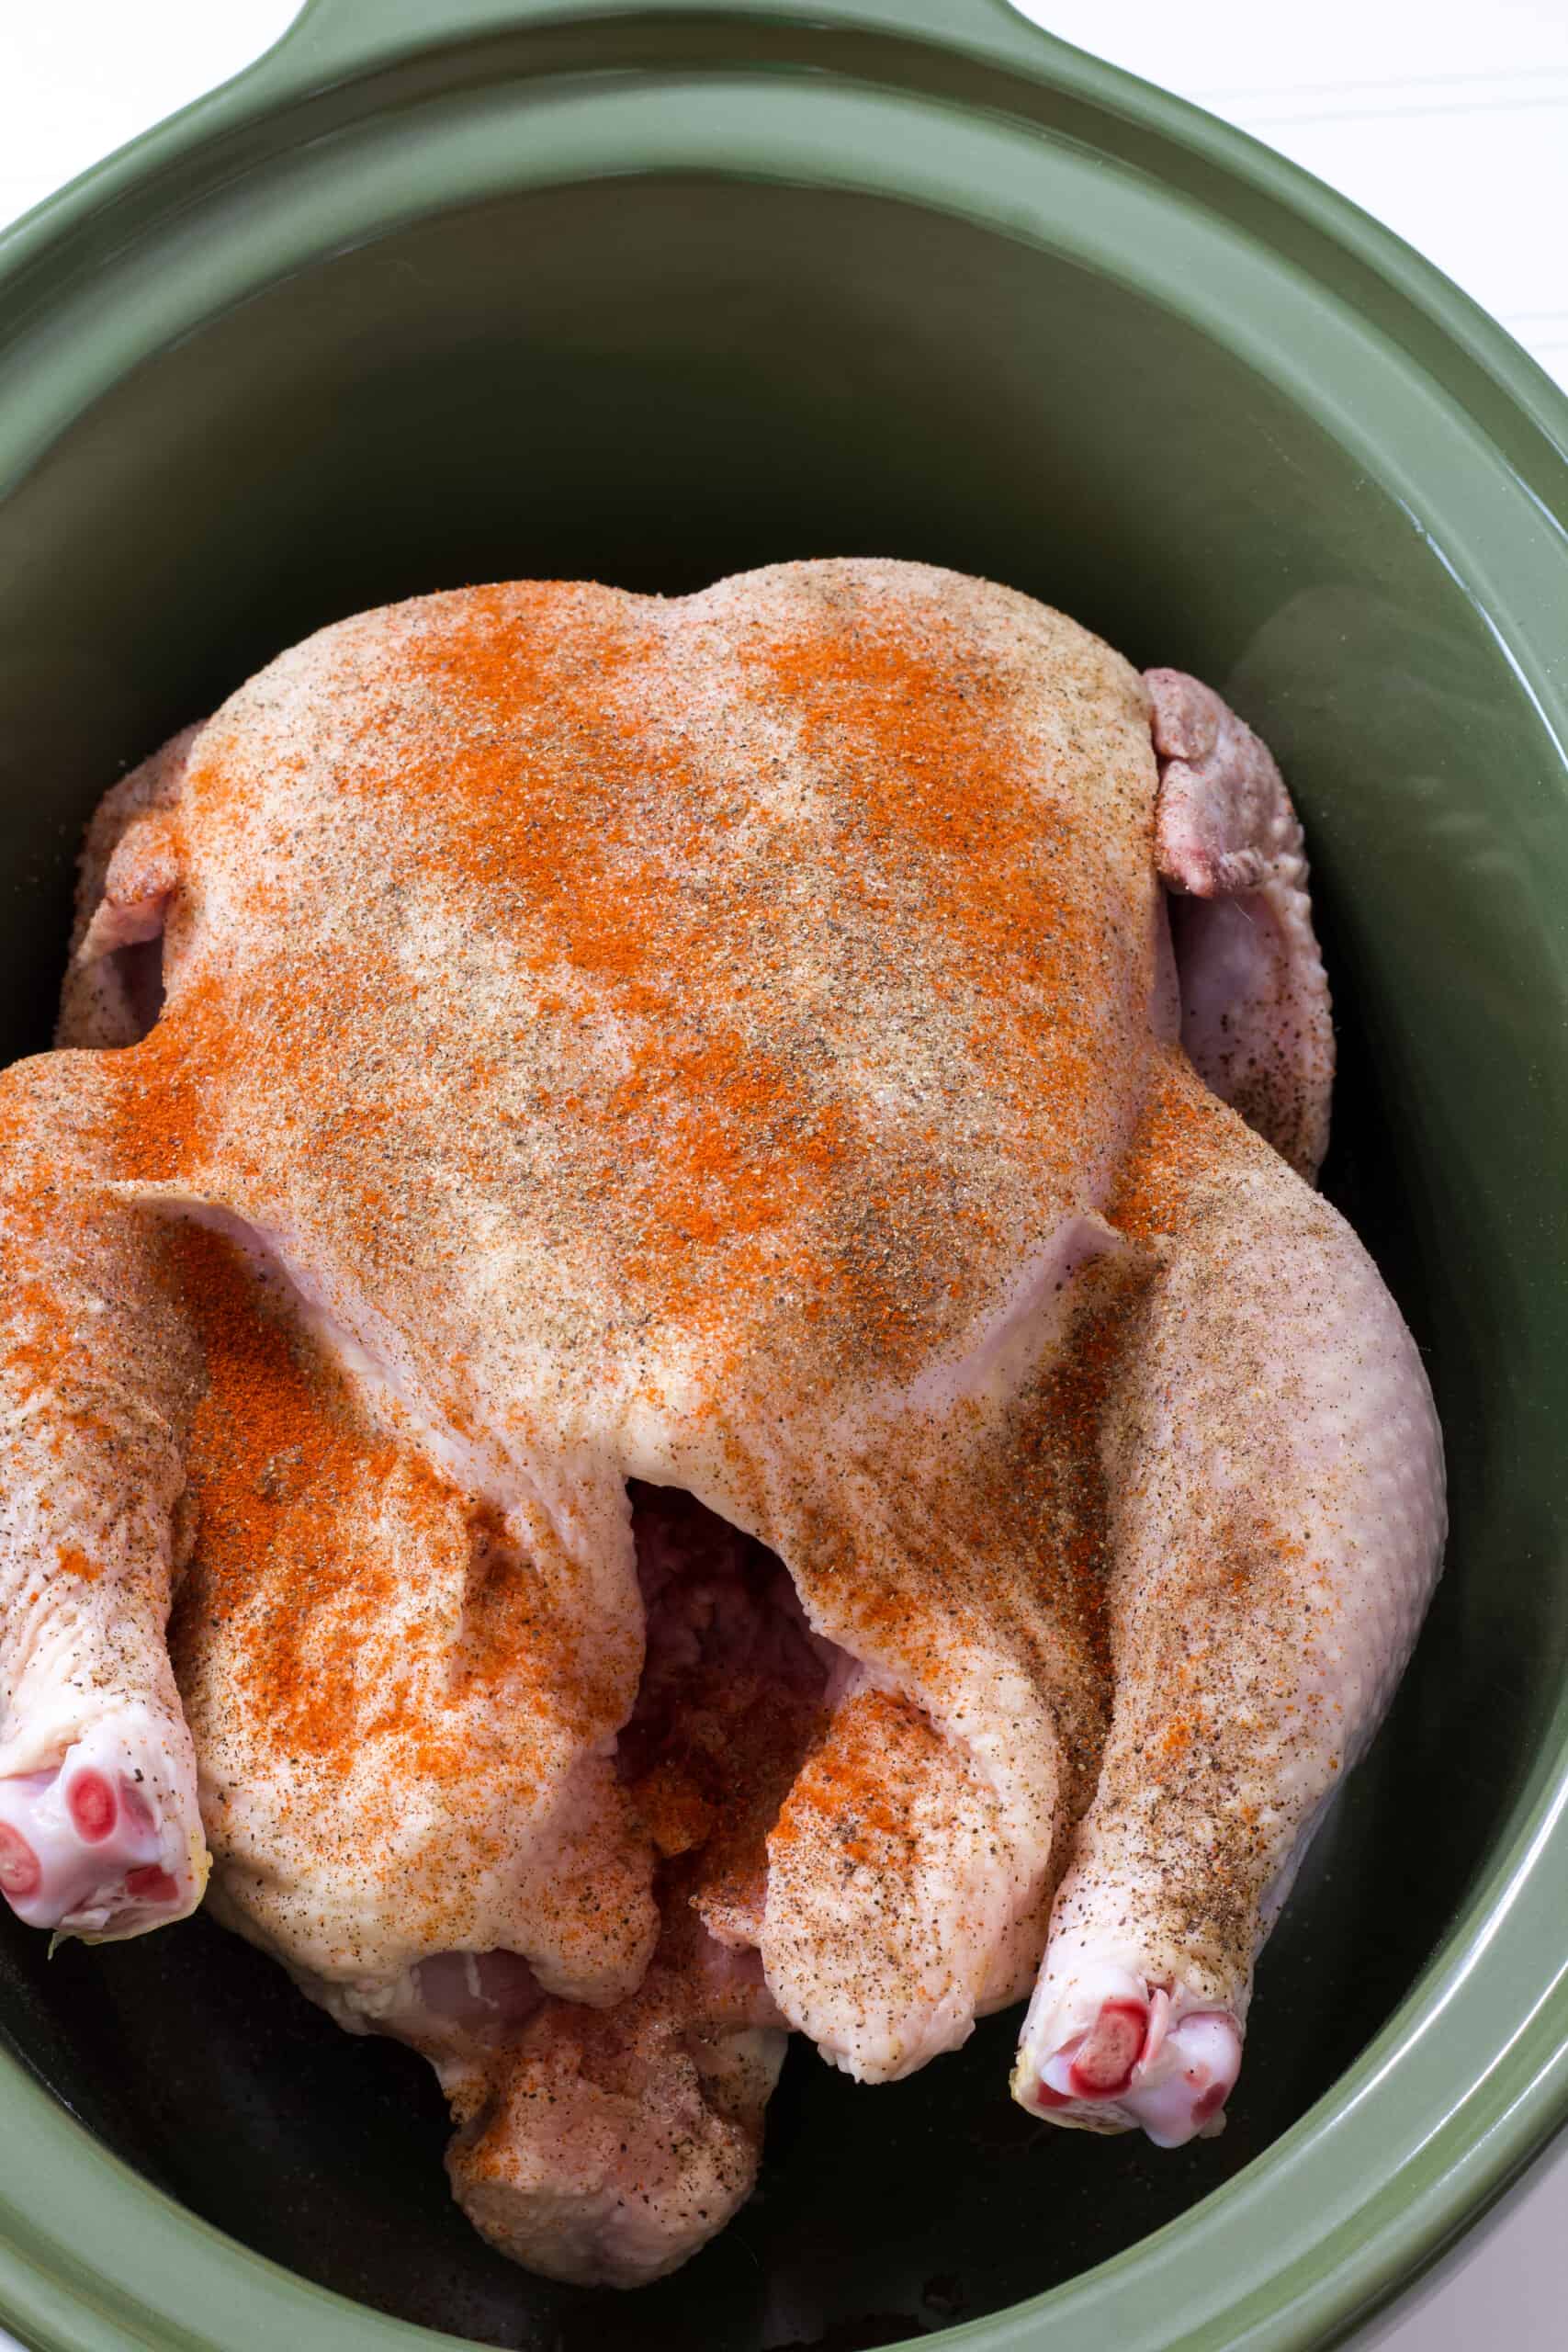 The raw seasoned chicken in the dark green crockpot.